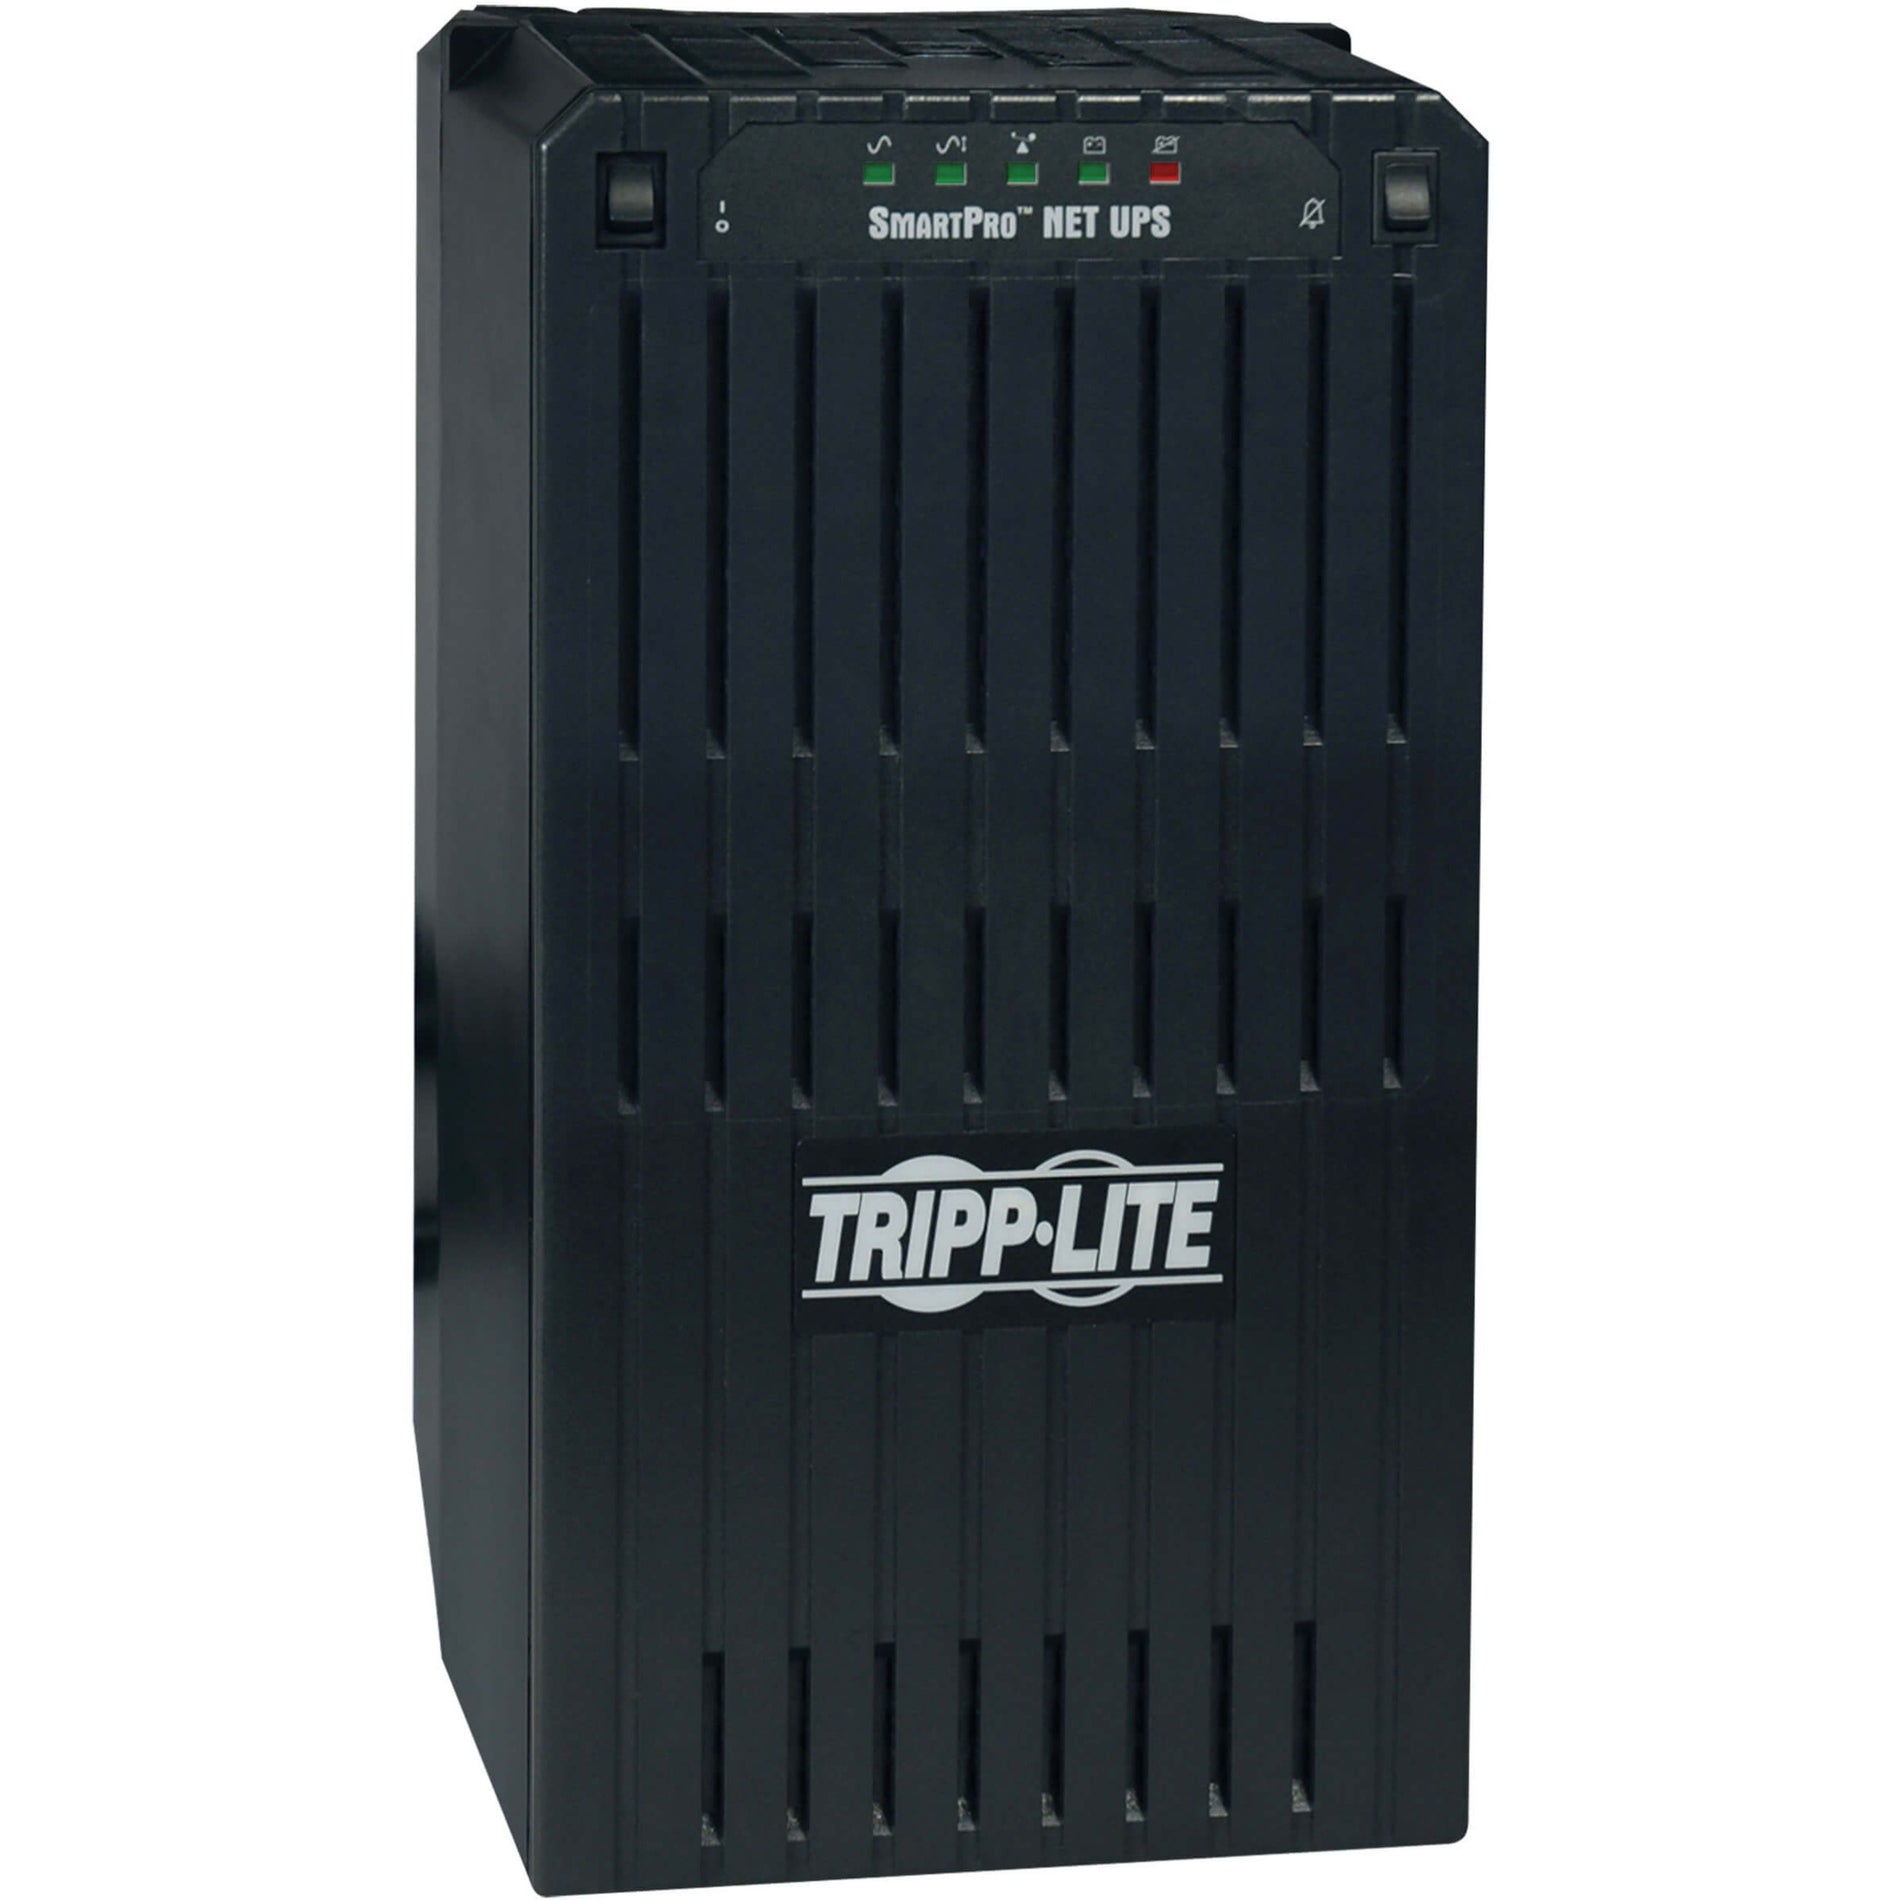 Tripp Lite SMART2200NET 智能升级 2200VA UPS，备份时间 27分钟，6个插座，黑色 Tripp Lite 崔普利特